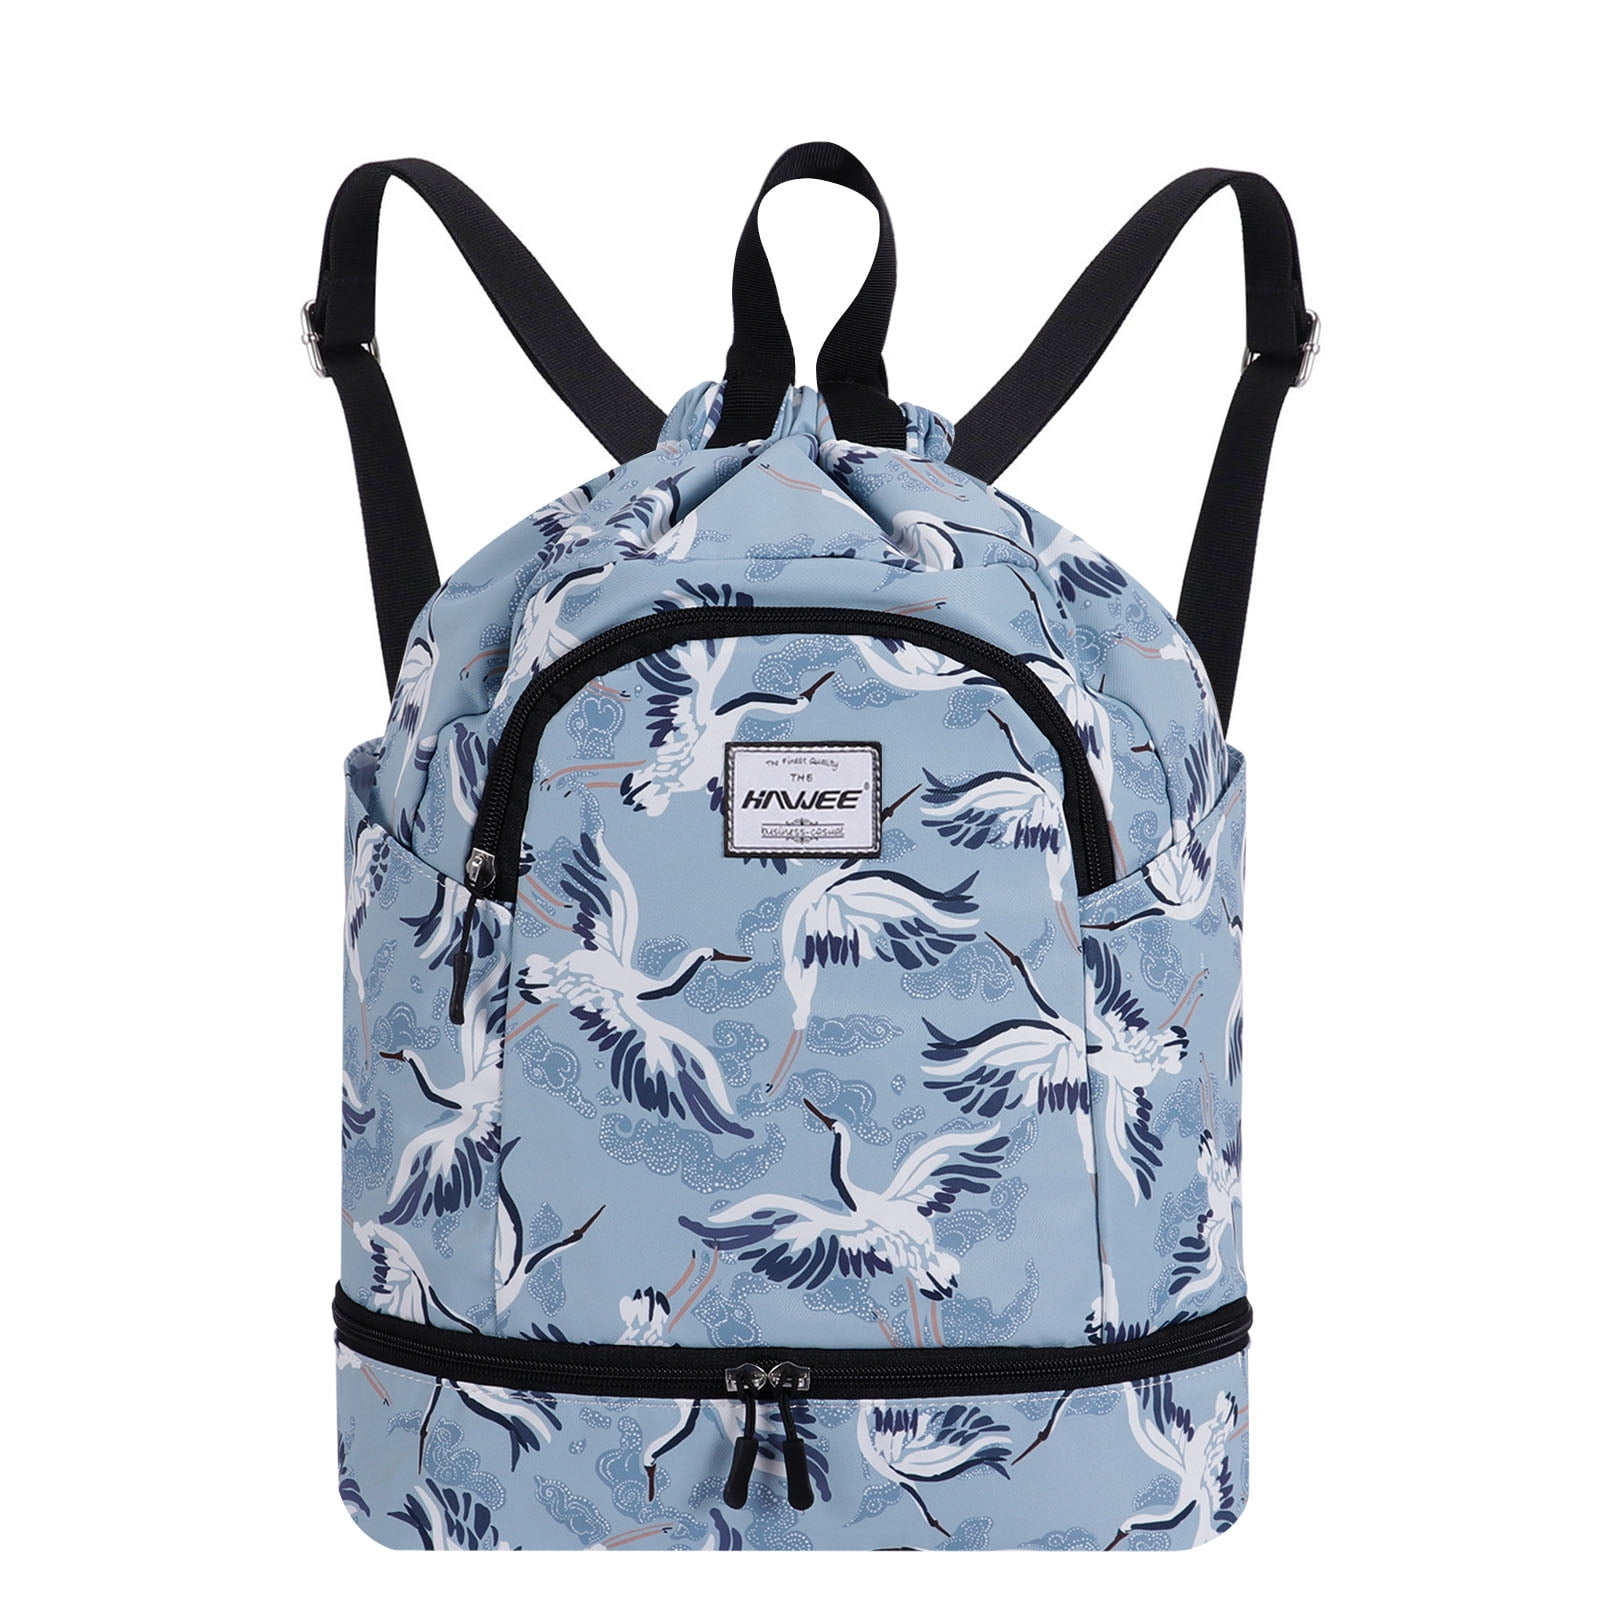 Cute Sloth Waterproof Gym Drawstring Bag,Sports Backpack for Women Girls 